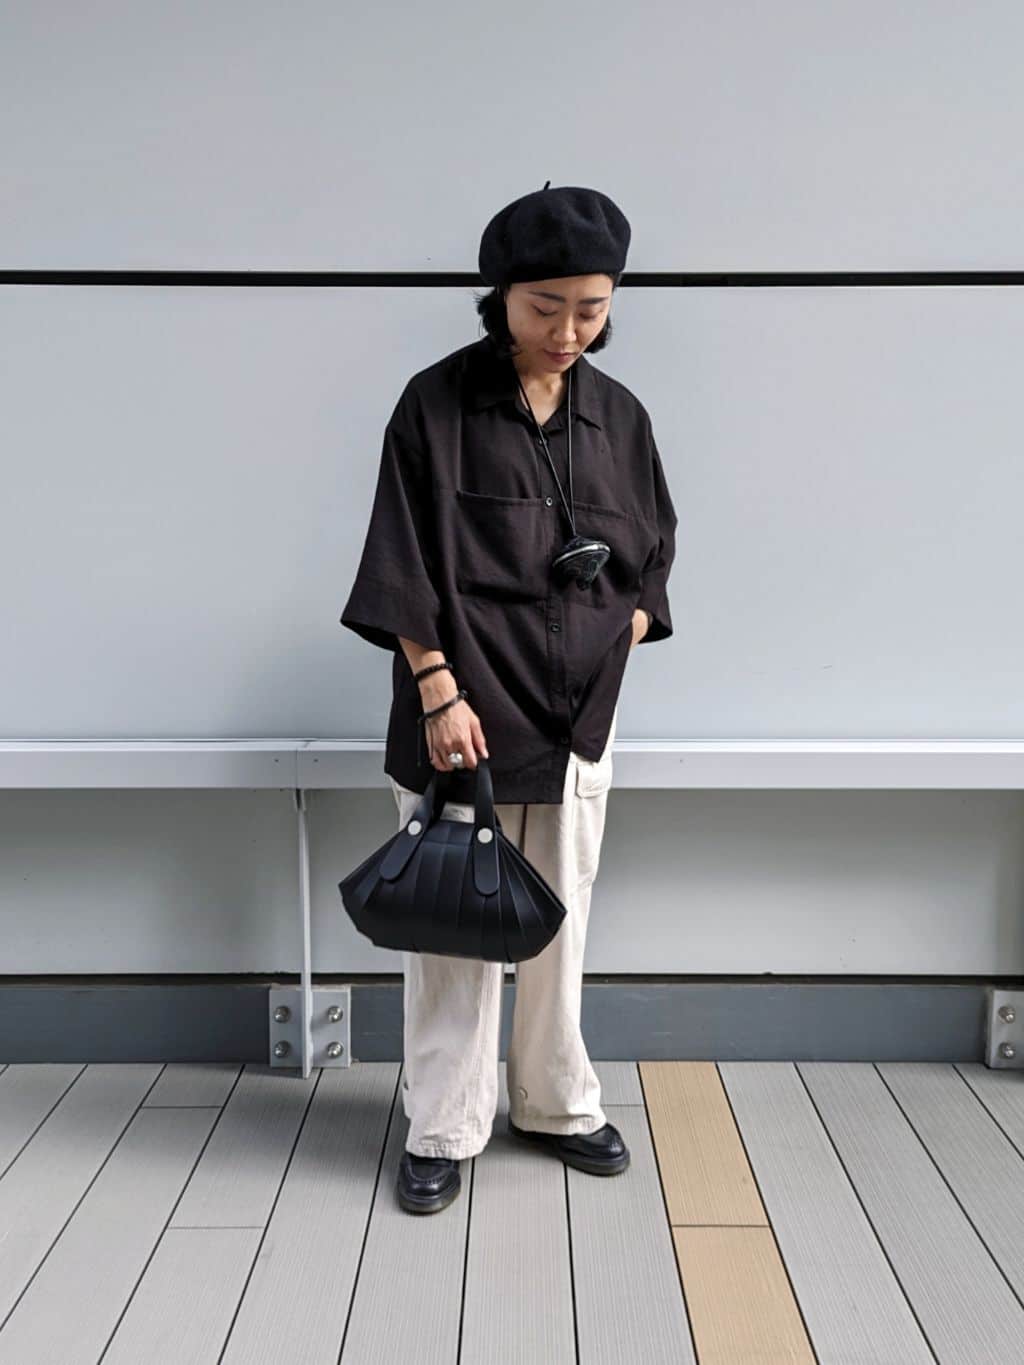 HIROKO HAYASHIのOSSO VIVO(オッソ ヴィーヴォ)2wayバッグを使った